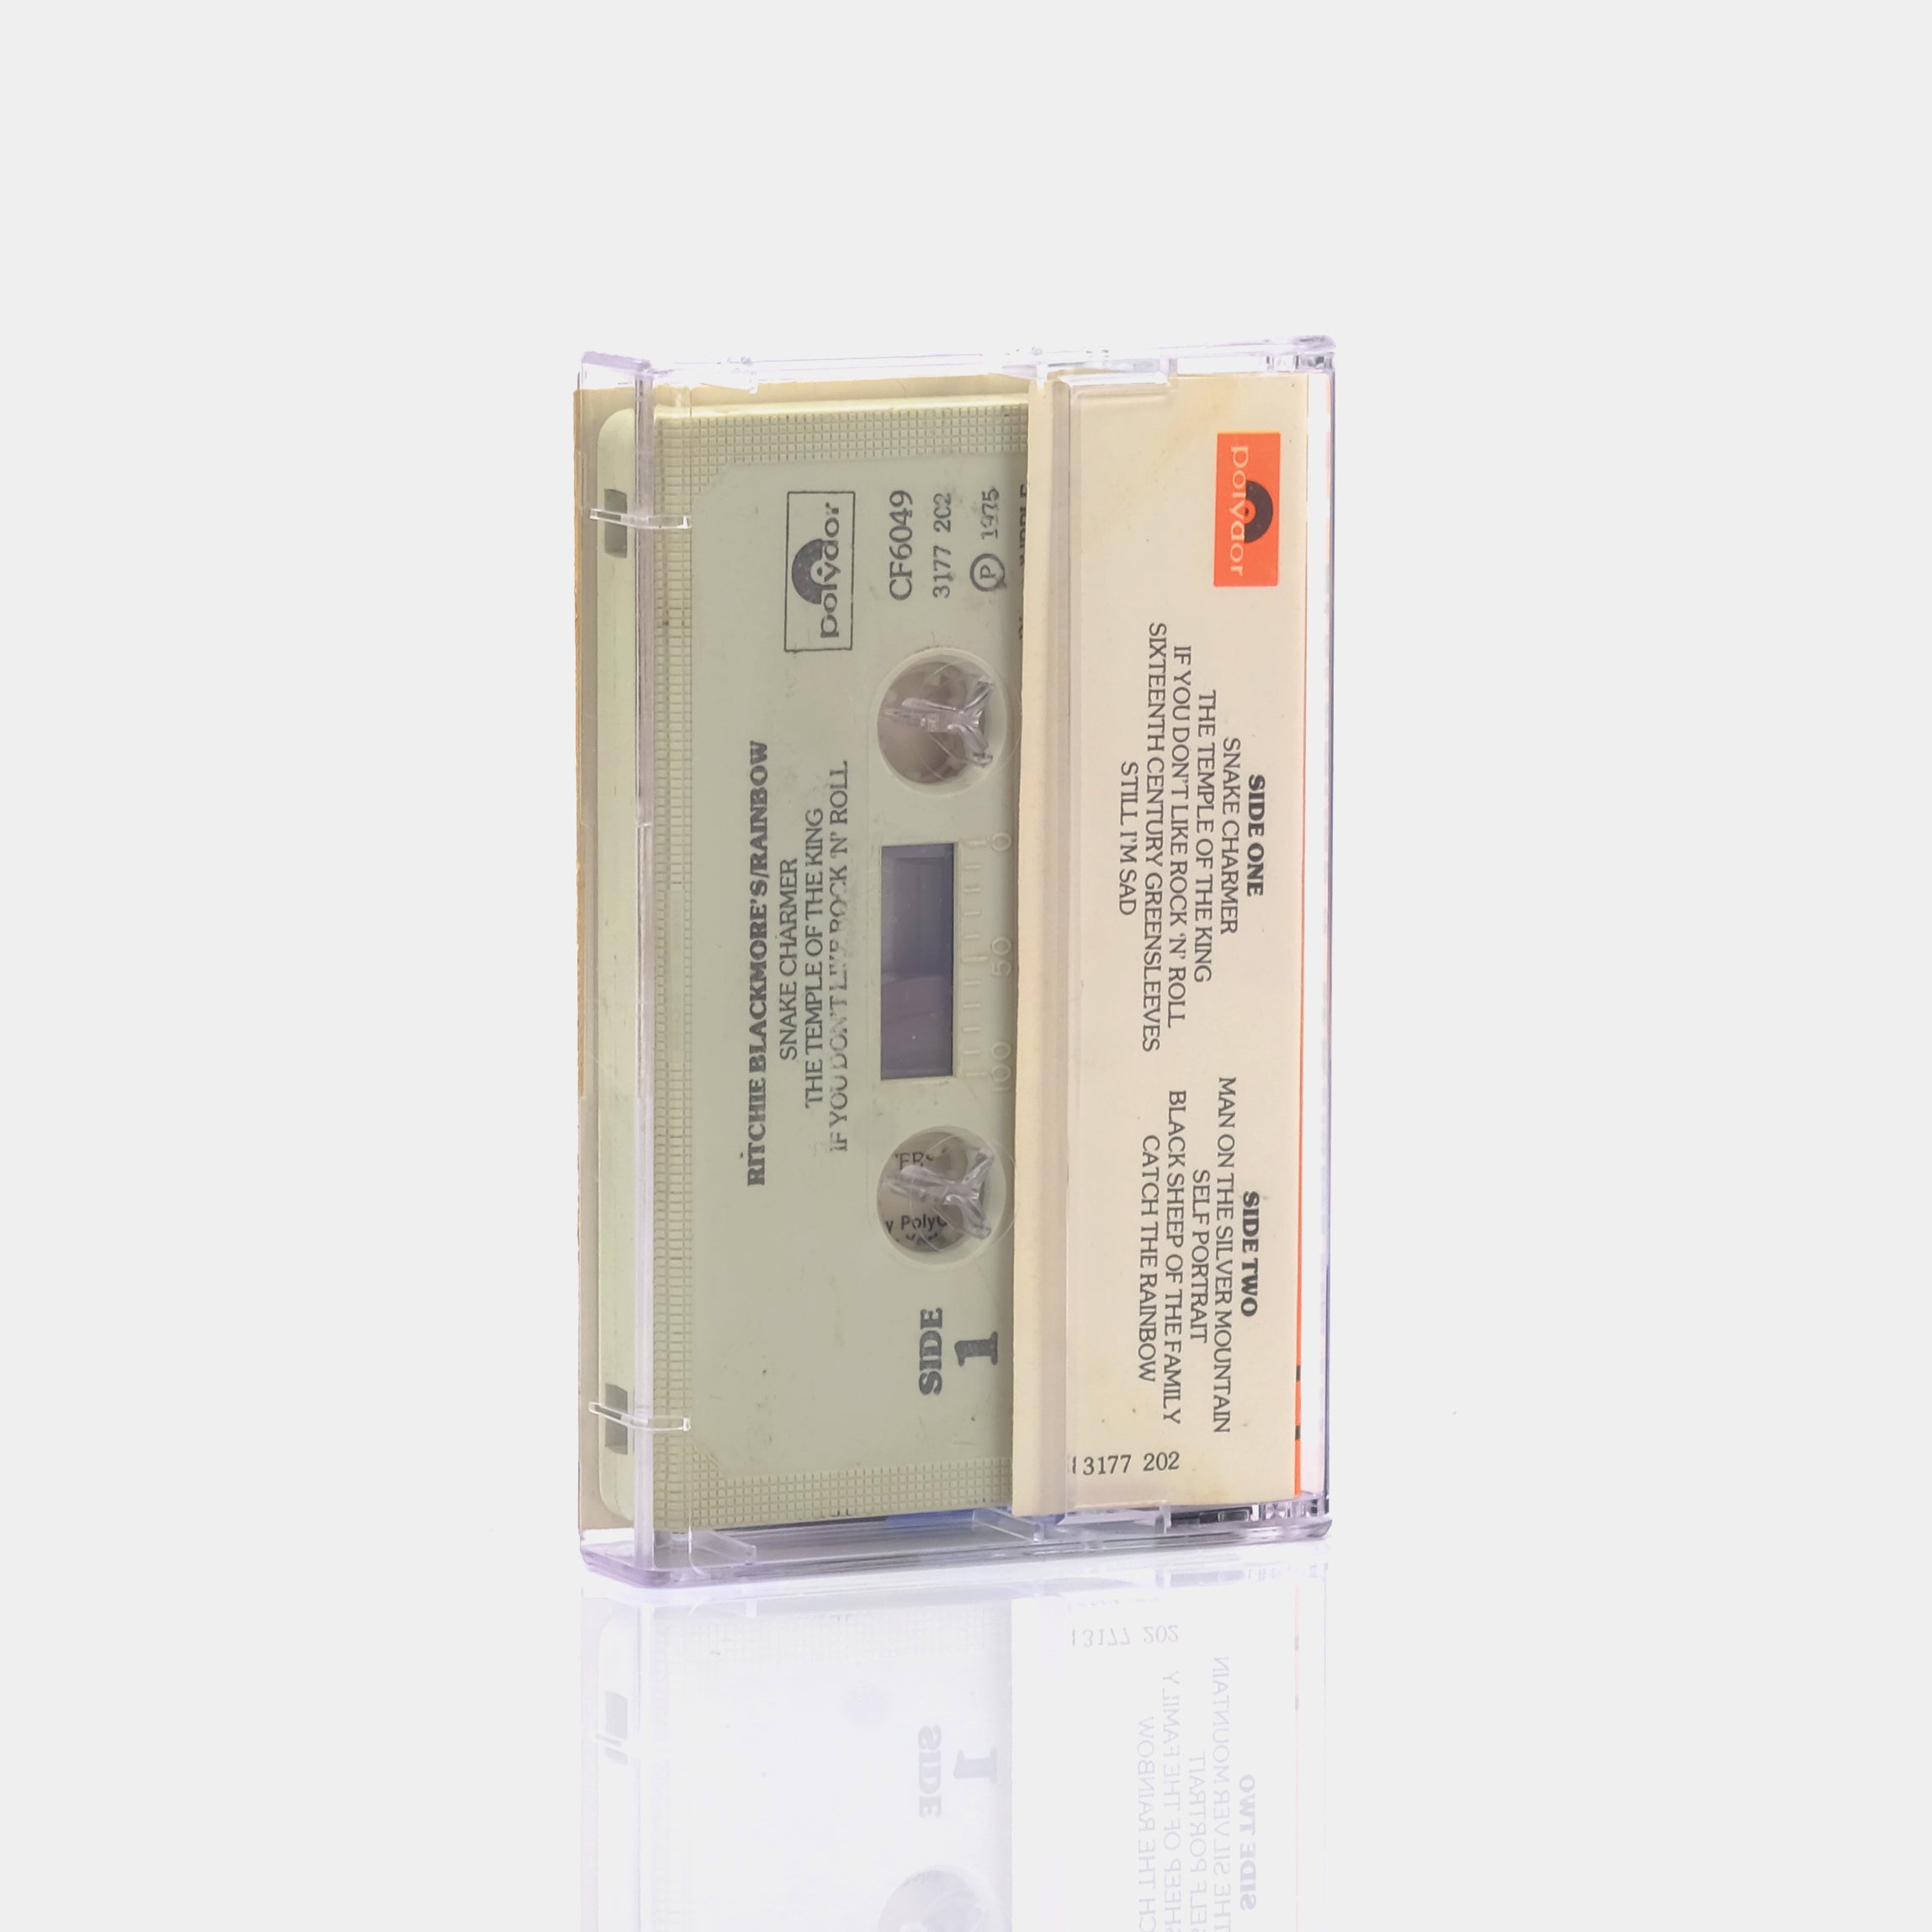 Rainbow - Ritchie Blackmore's Rainbow Cassette Tape